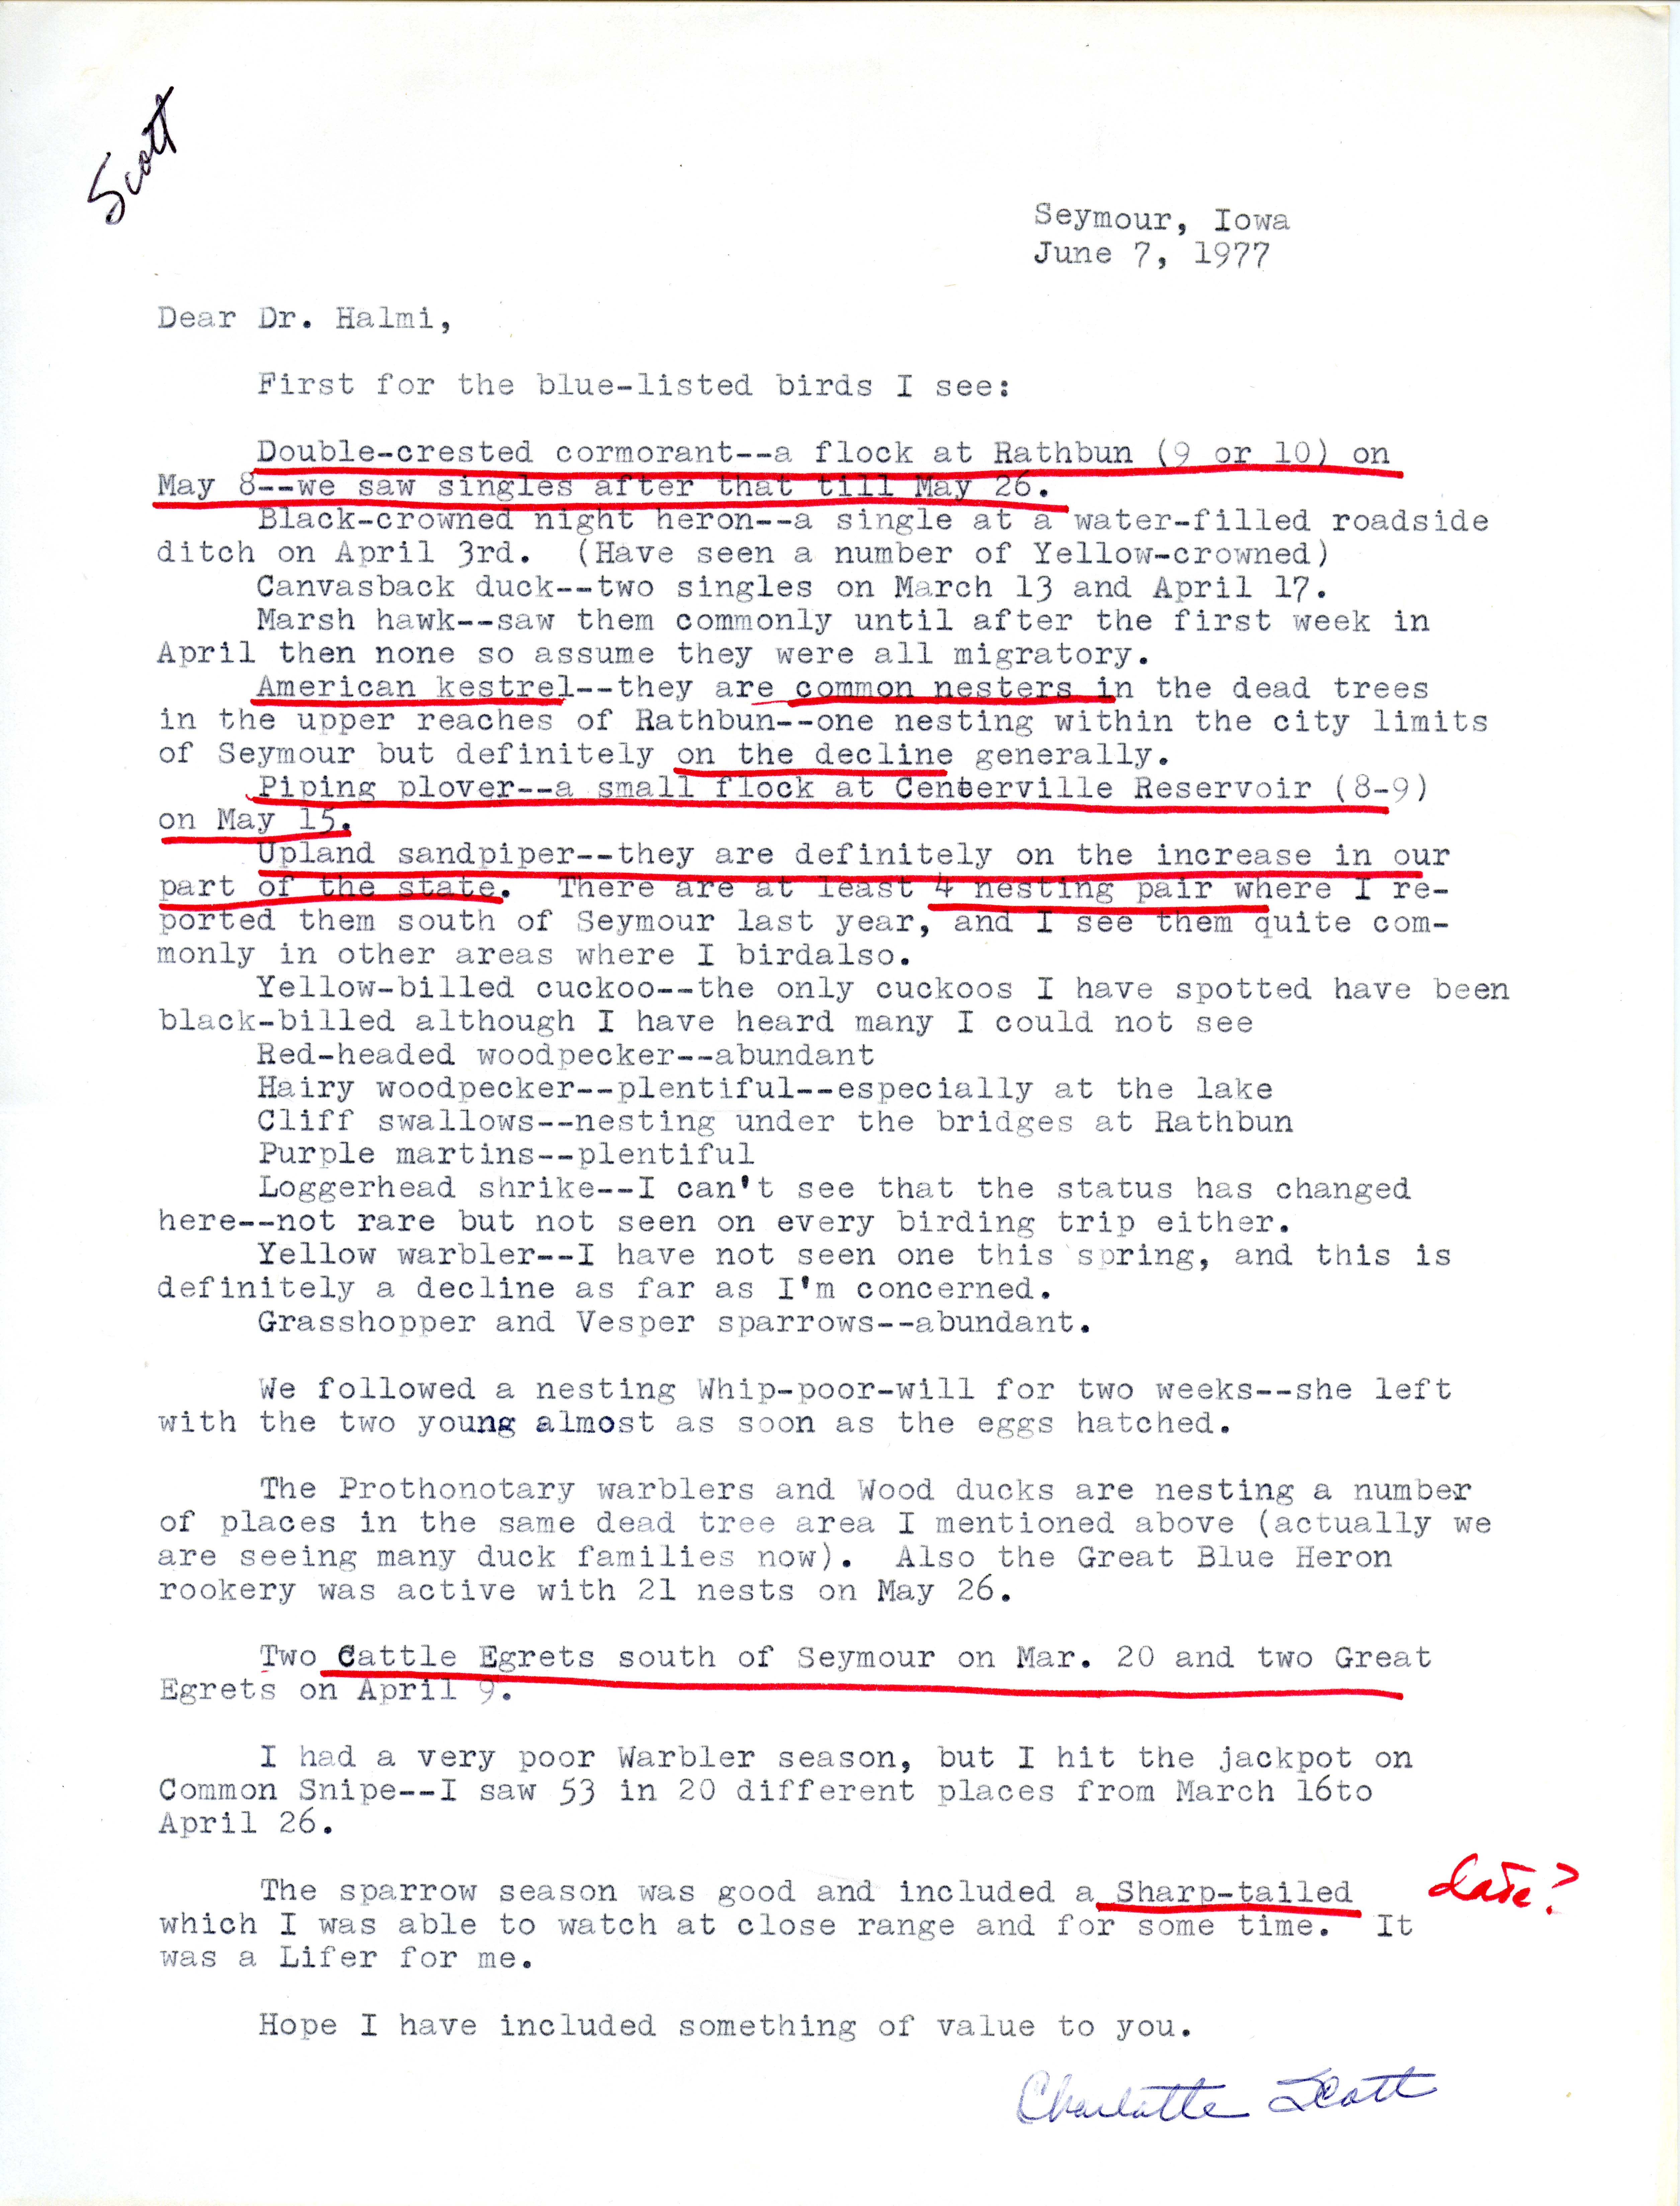 Charlotte Scott letter to Nicholas S. Scott regarding blue-listed birds, June 7, 1977